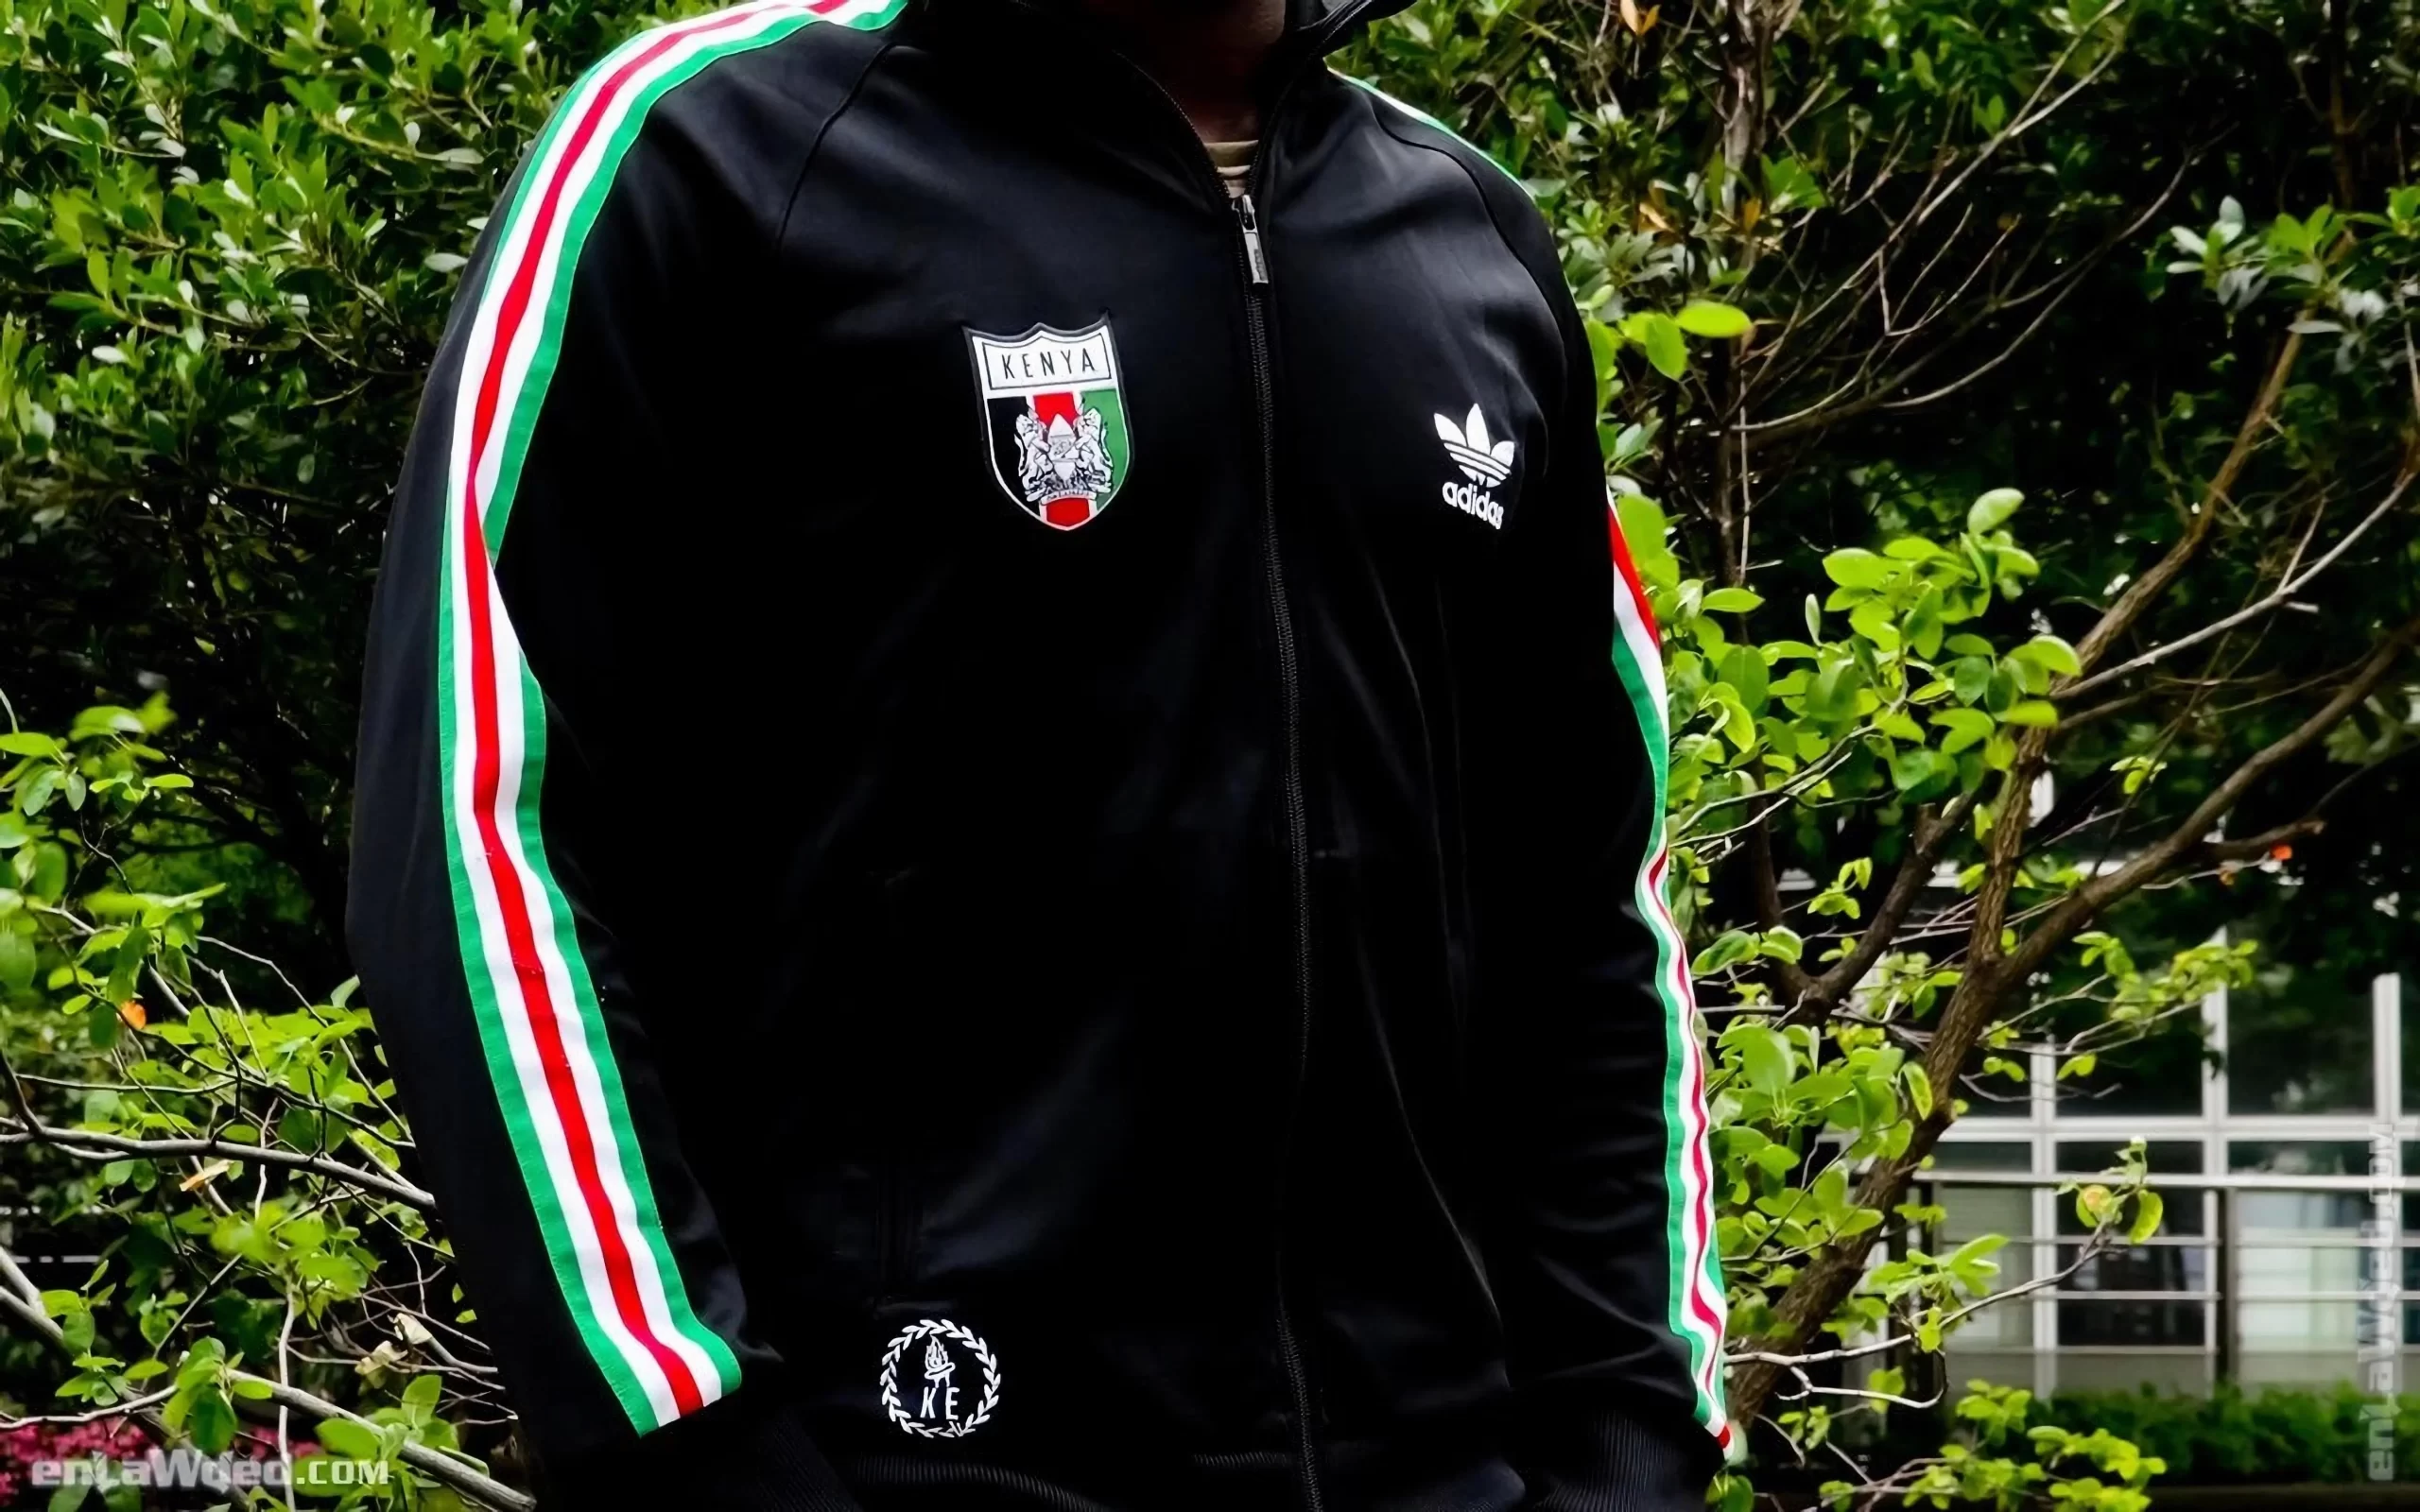 Men’s 2007 Kenya Harambee TT by Adidas Originals: Breakthrough (EnLawded.com file #lmcgjh6qfnamt3ys5mq)